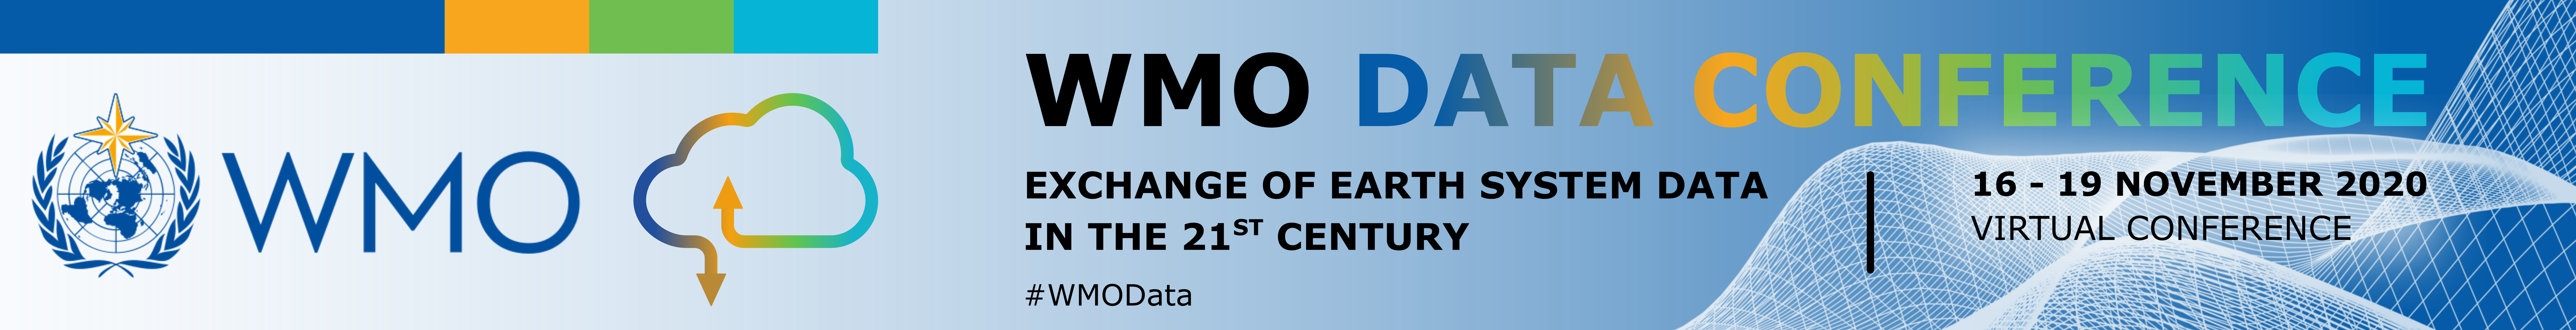 WMO Data Conference